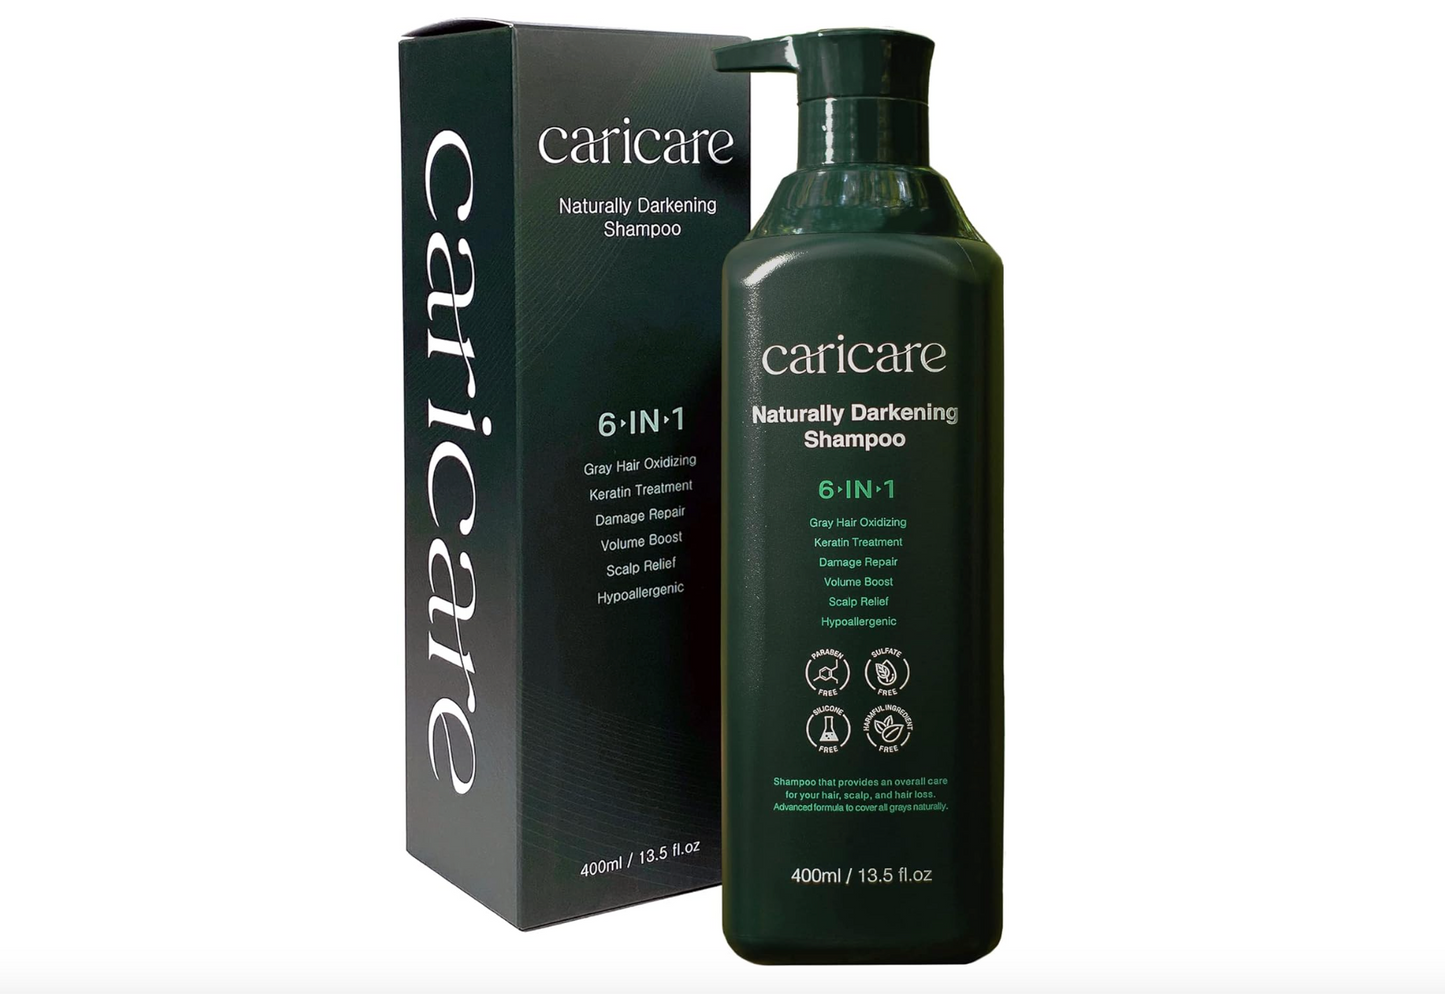 CariCare - Naturally Darkening Shampoo